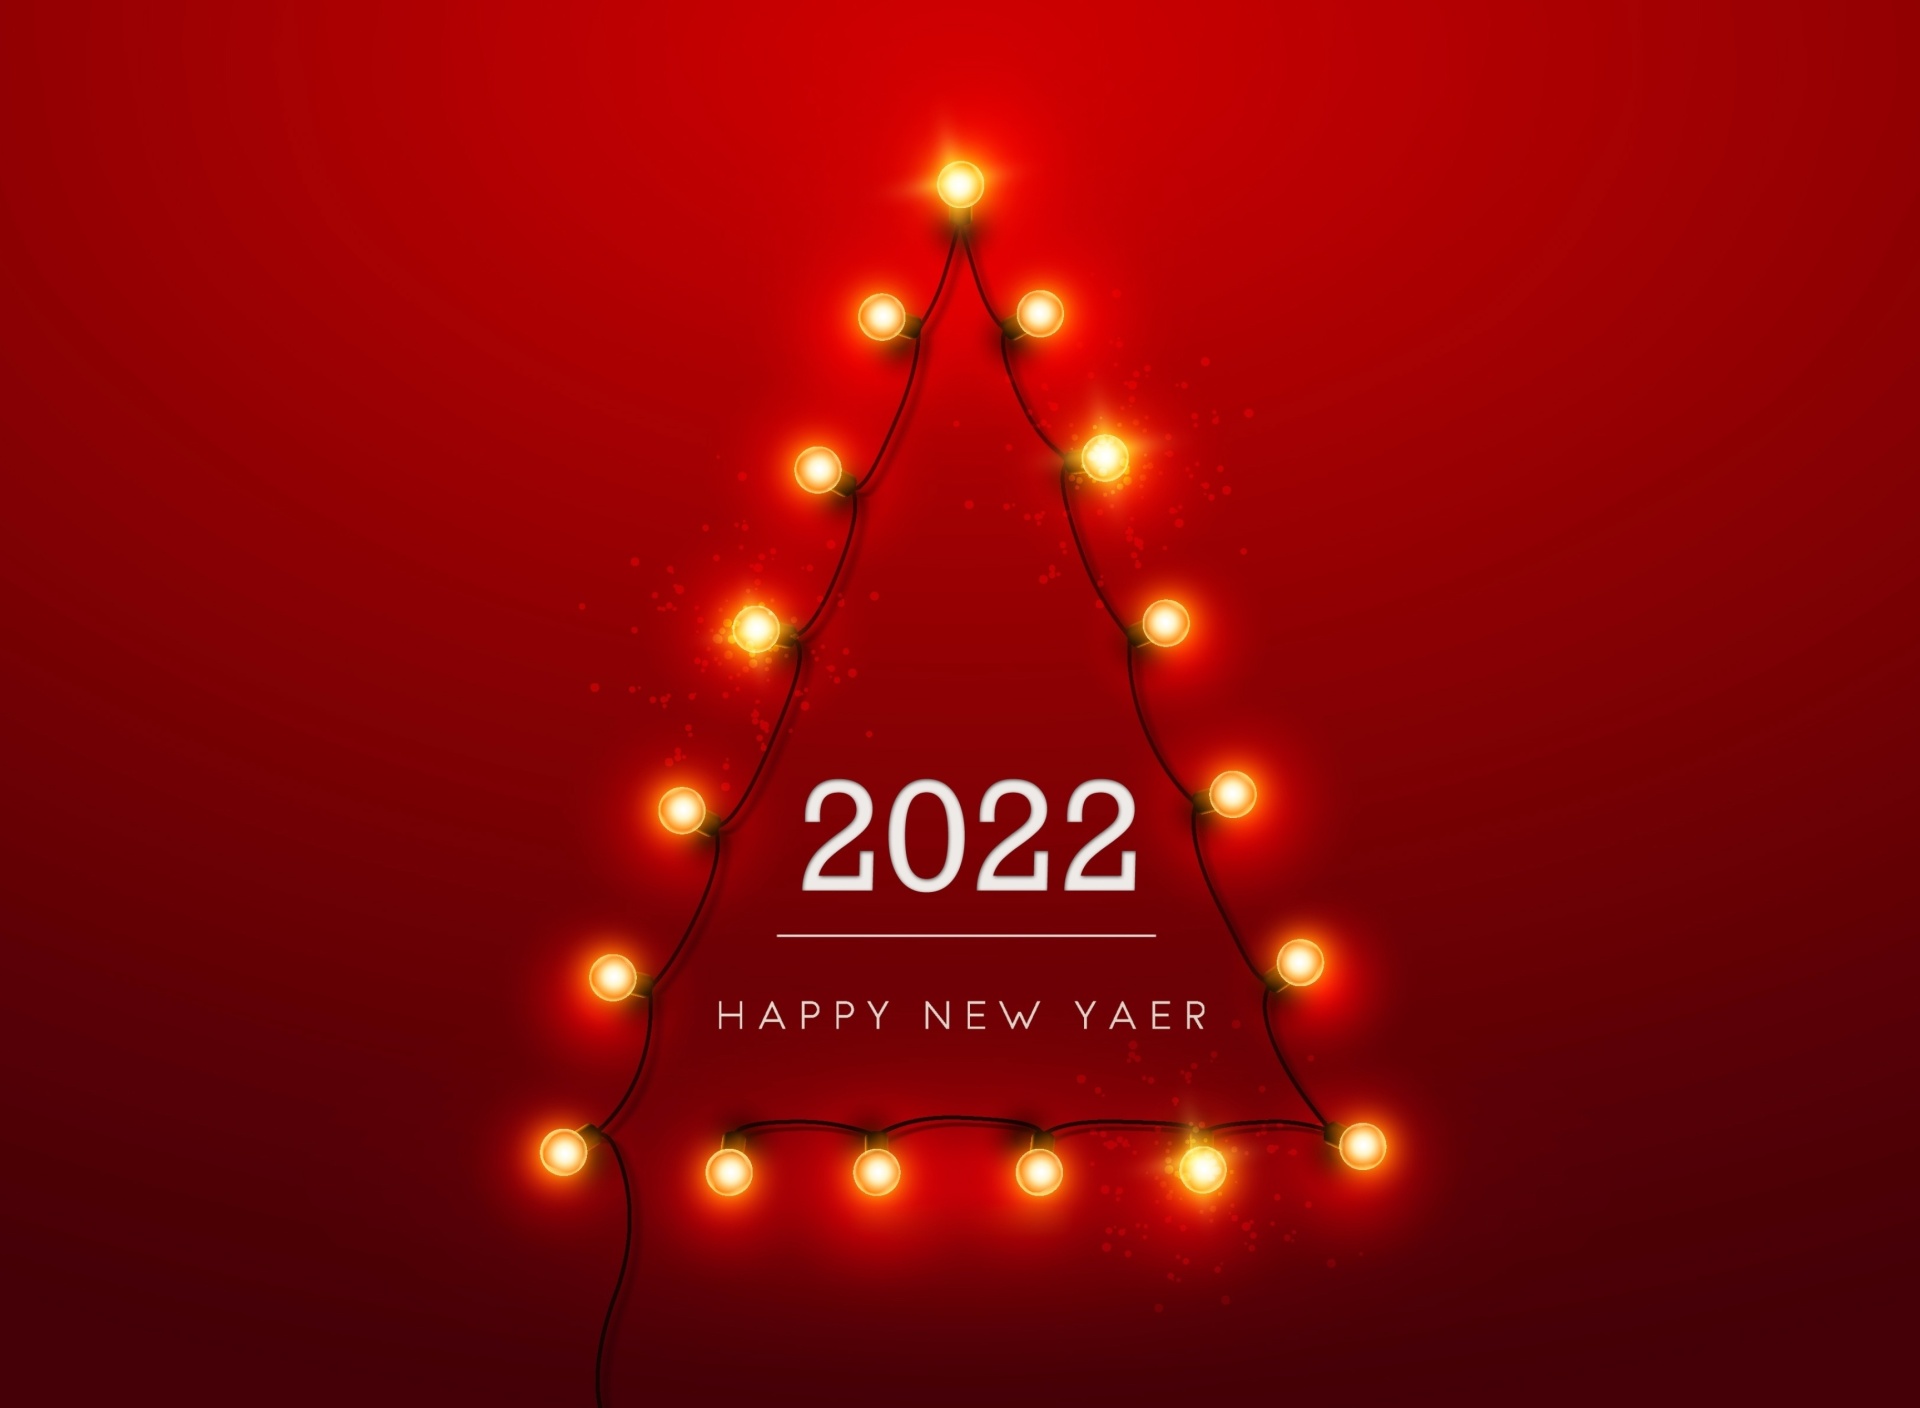 Happy New Year 2022 wallpaper 1920x1408